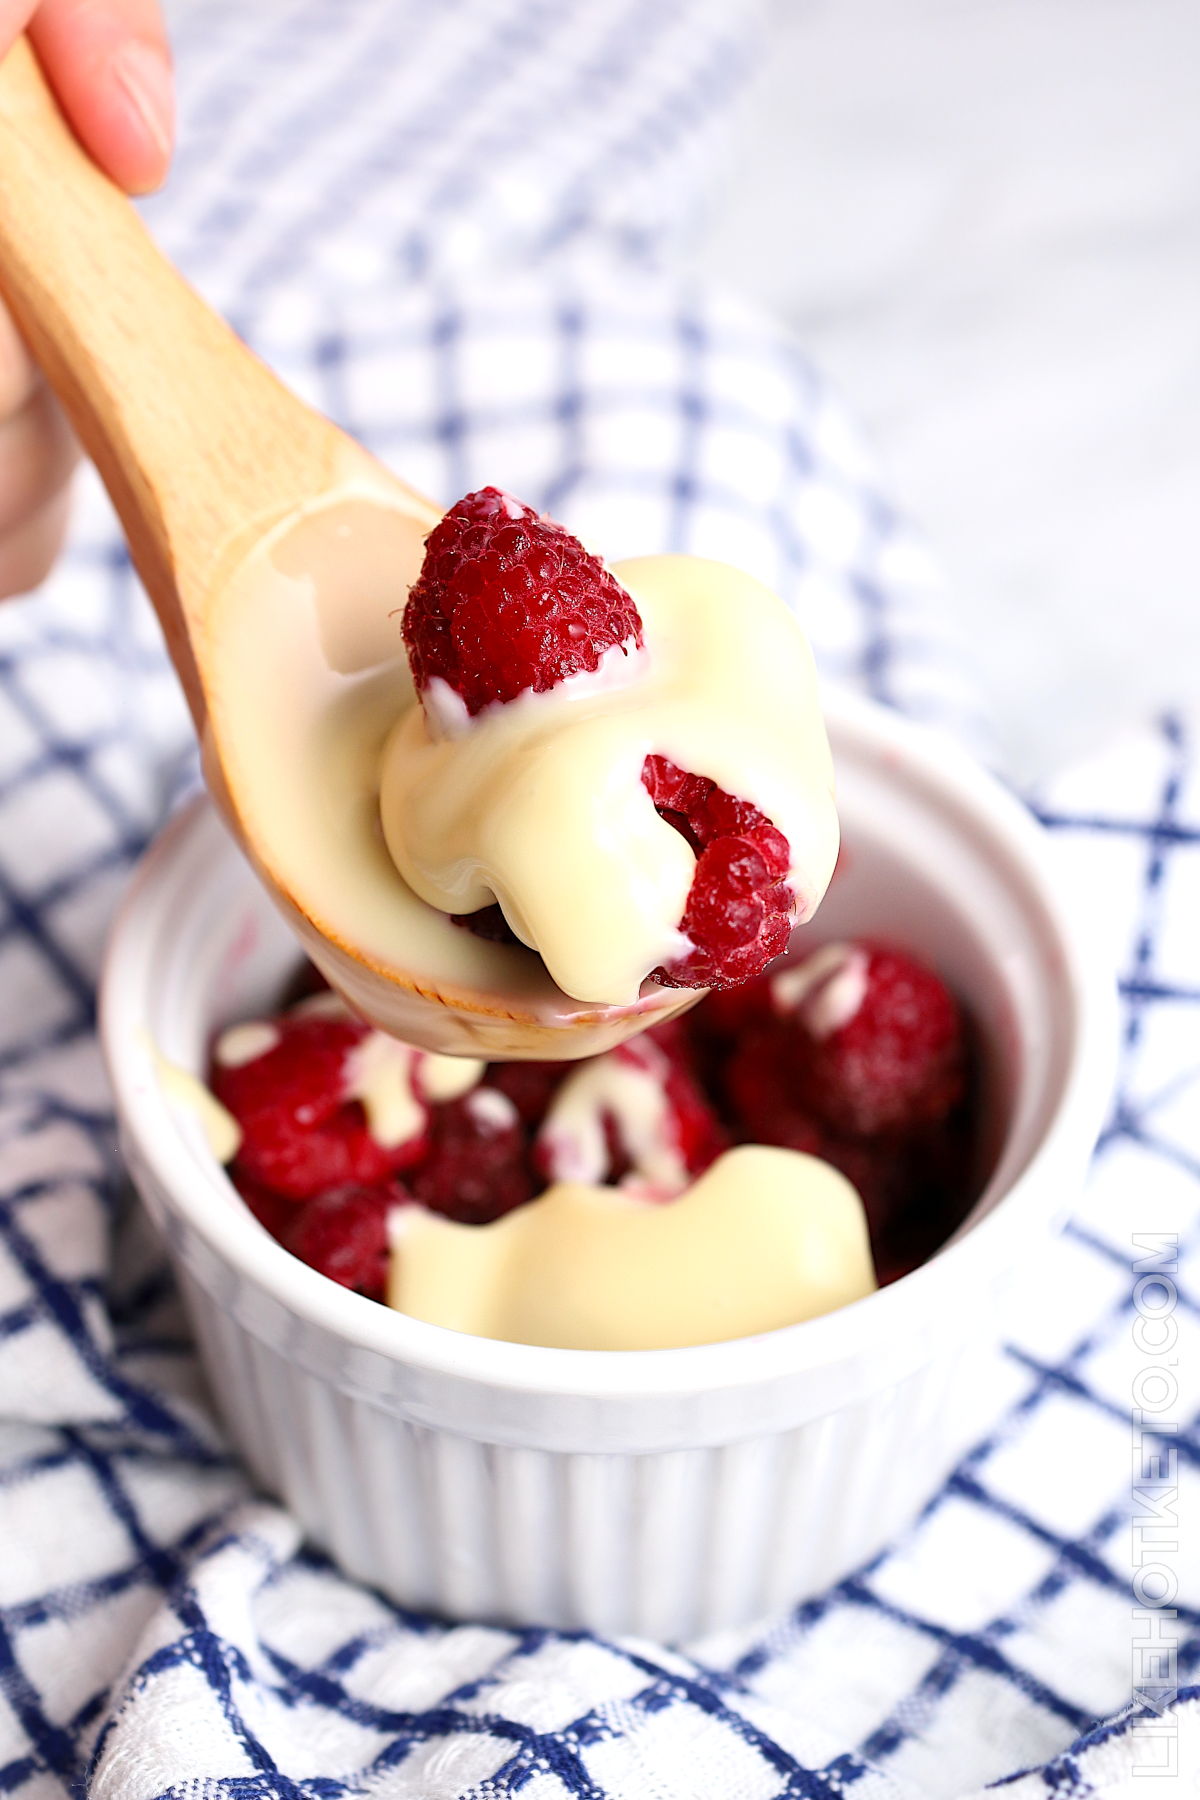 Sugar-free condensed milk over fresh raspberries in a white ramekin and spoon.